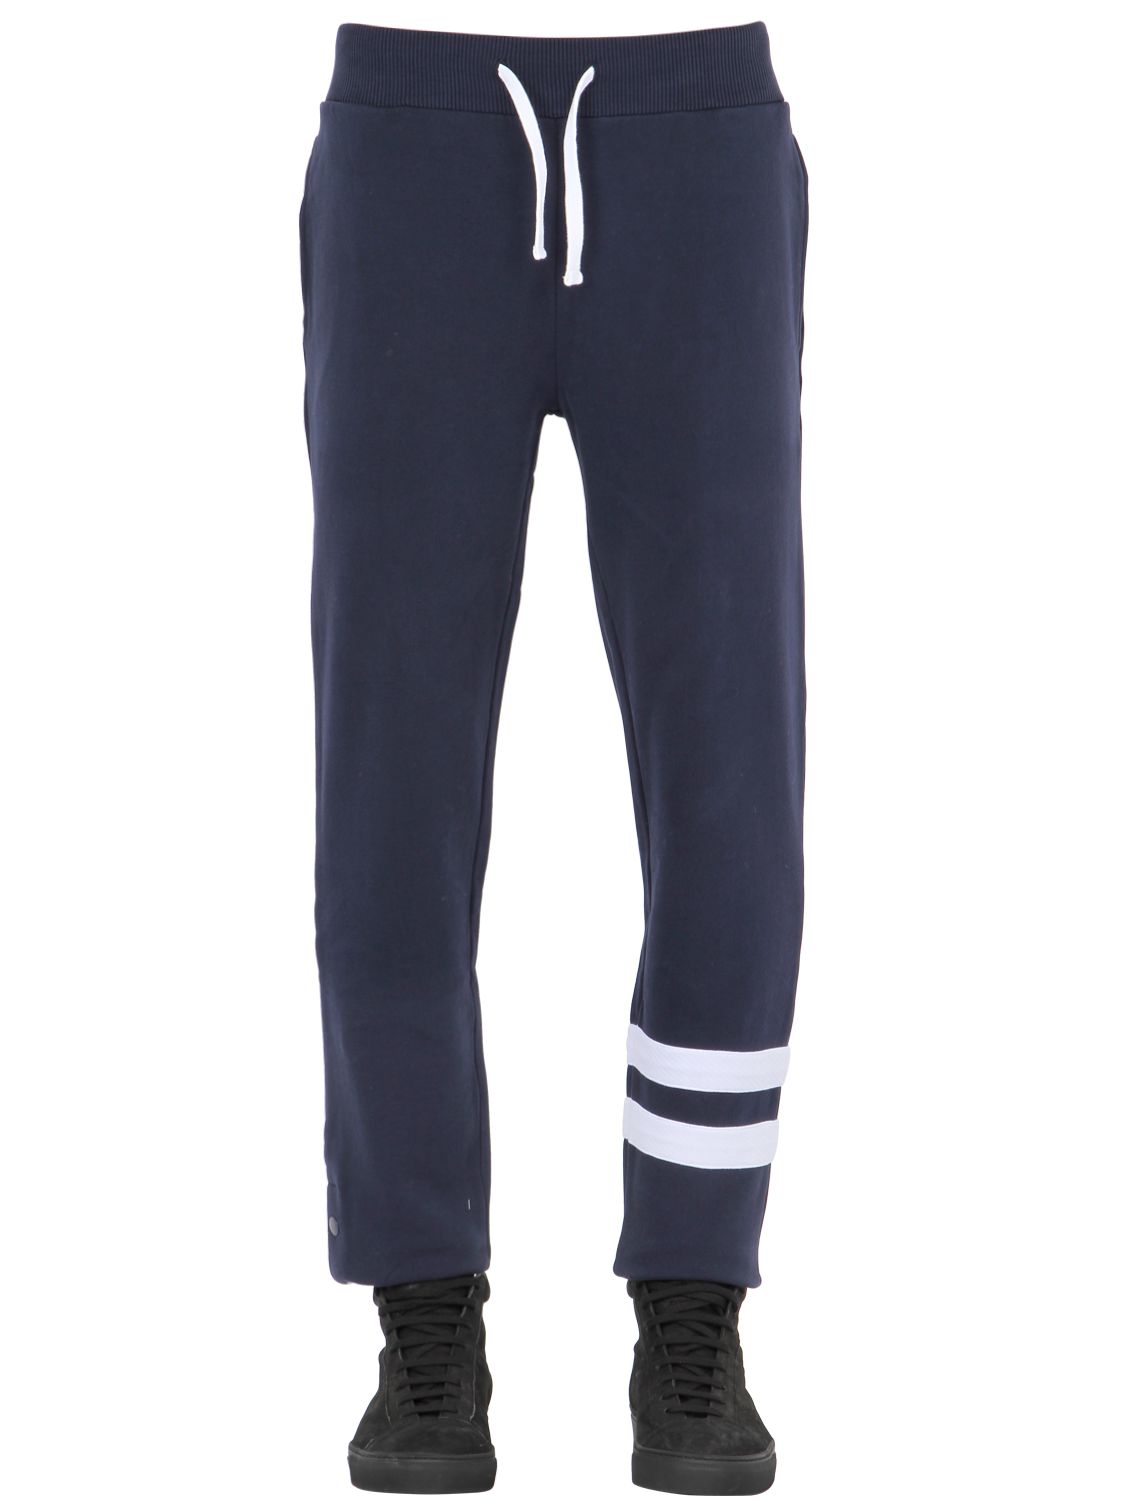 Lyst - Hydrogen College Cotton Jogging Pants W/ Stripes in Blue for Men